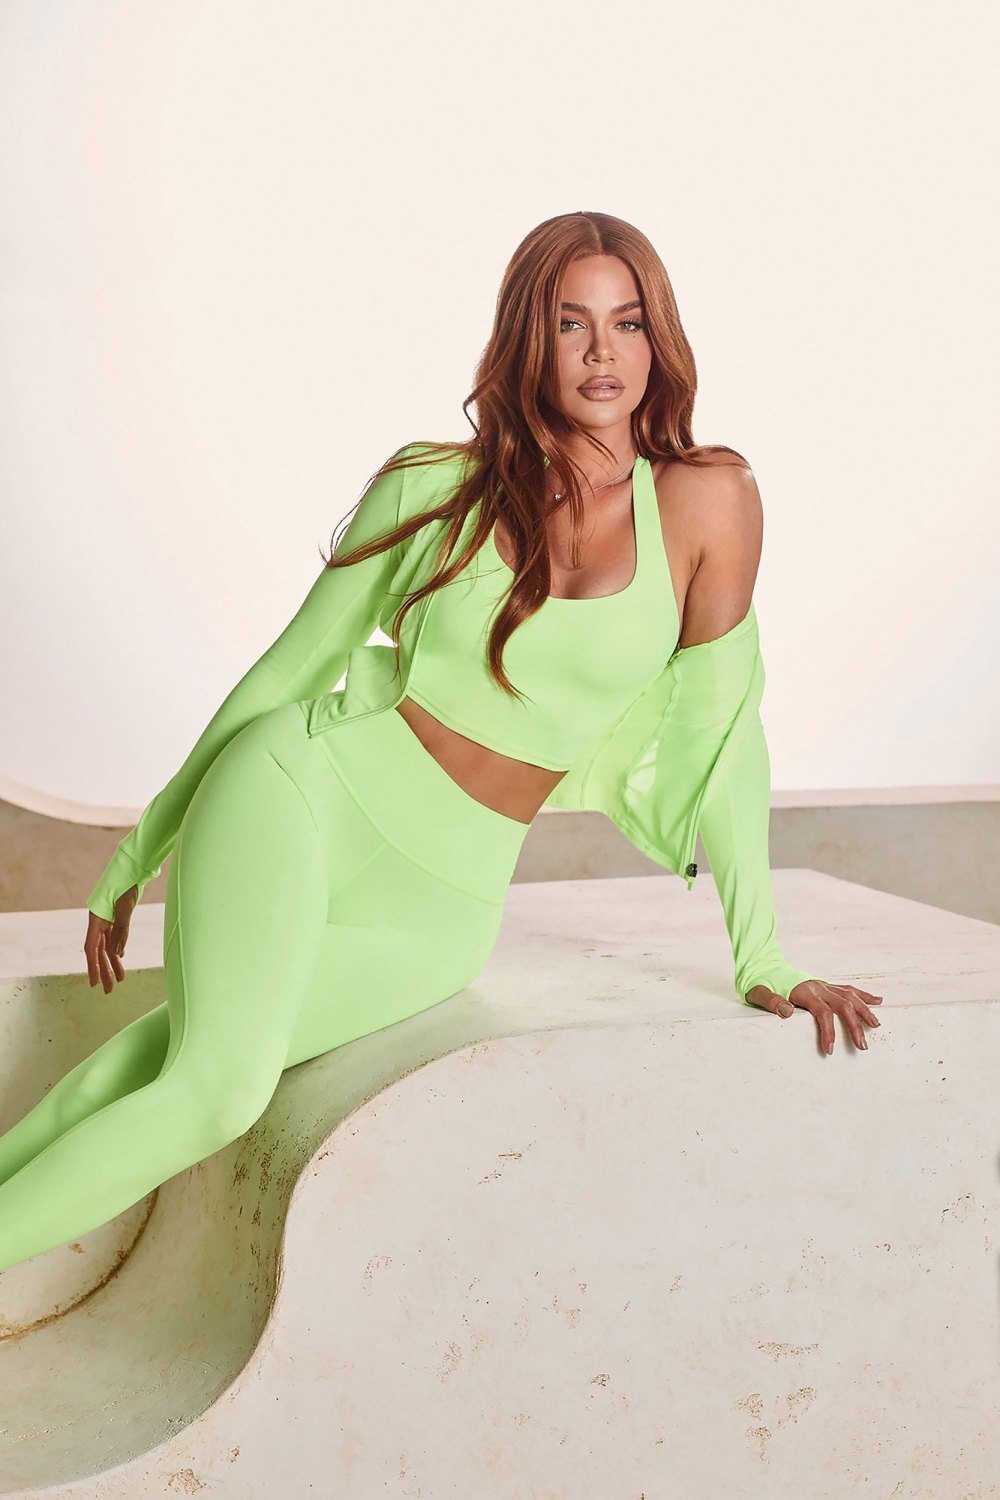 Khloe Kardashian enthüllt in Fabletics-Kampagne 4 rote Haare